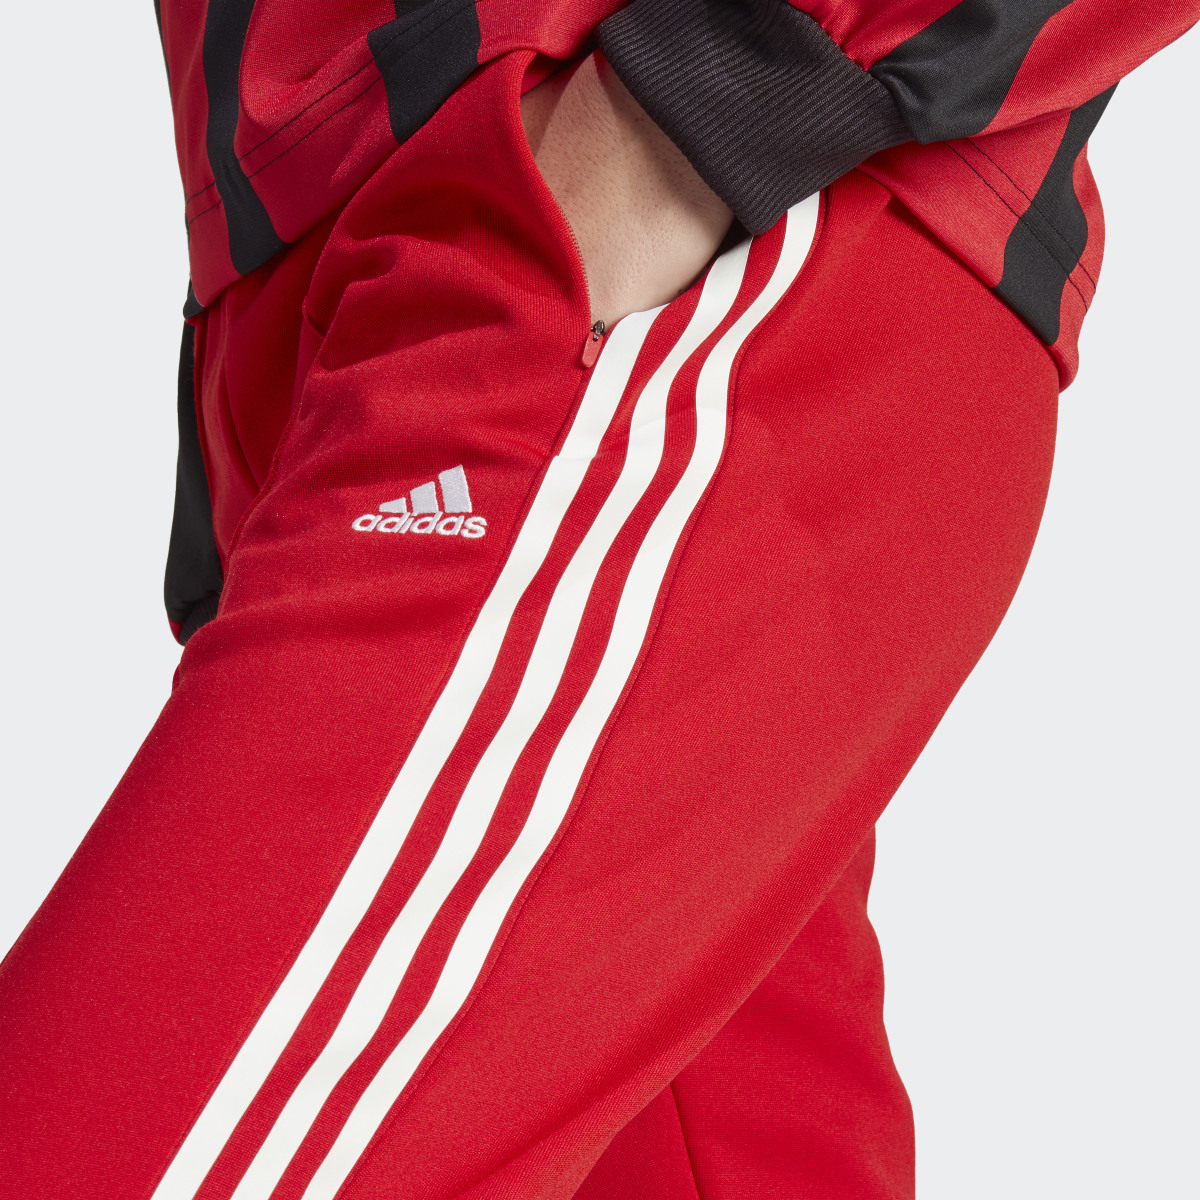 Adidas Pants Deportivo Tiro Suit Up Lifestyle. 6